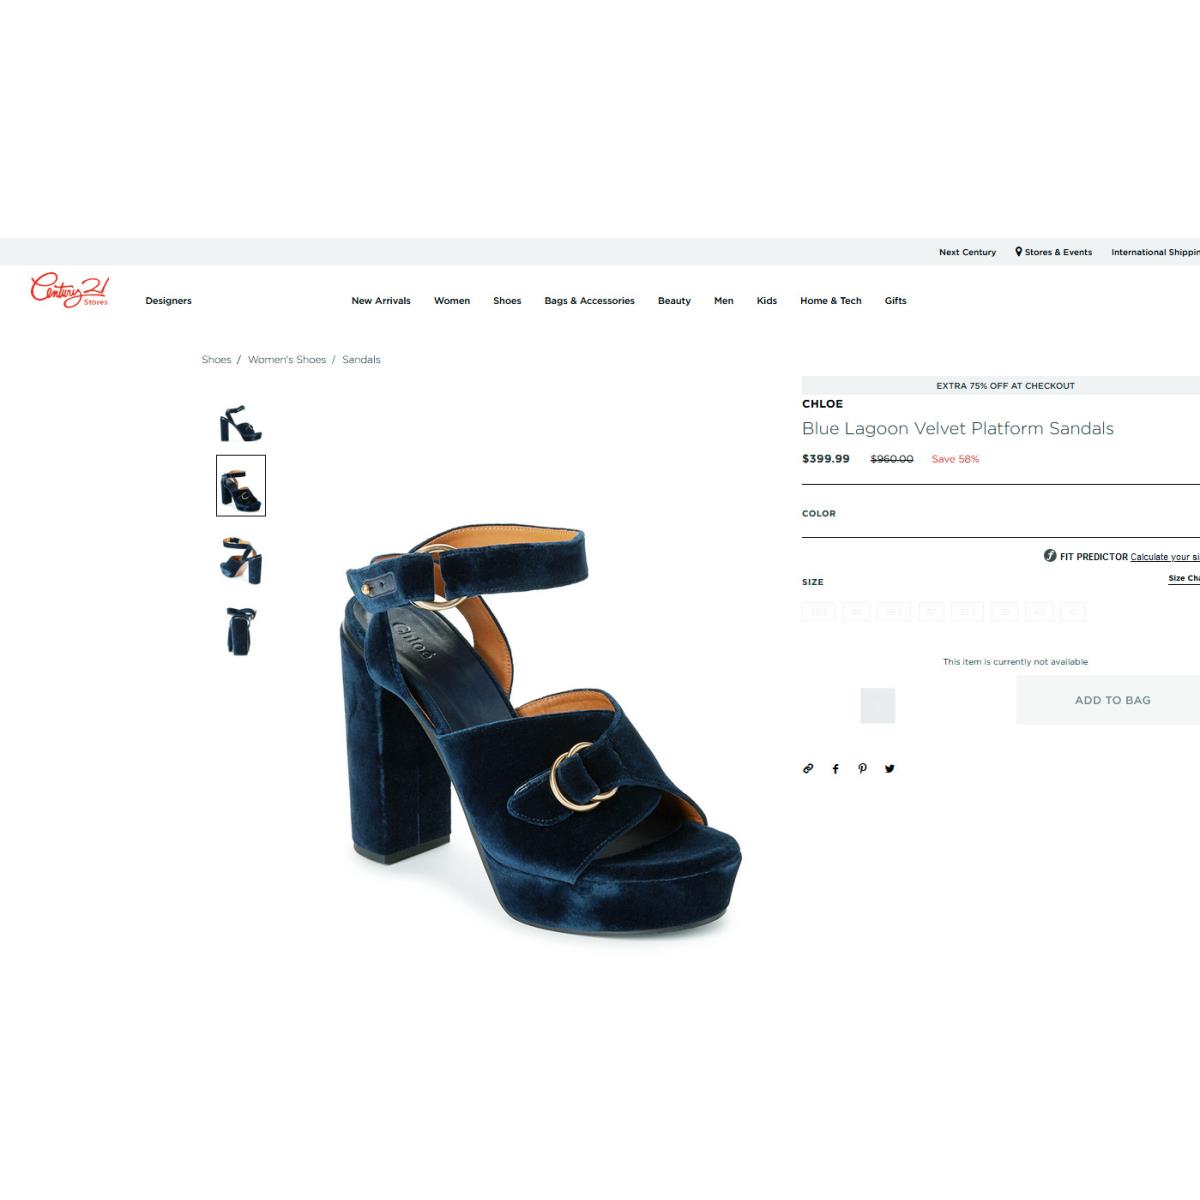 Chloe Blue Lagoon Velvet Platform Sandals sz US 6 / IT 36.5 Made in Italy